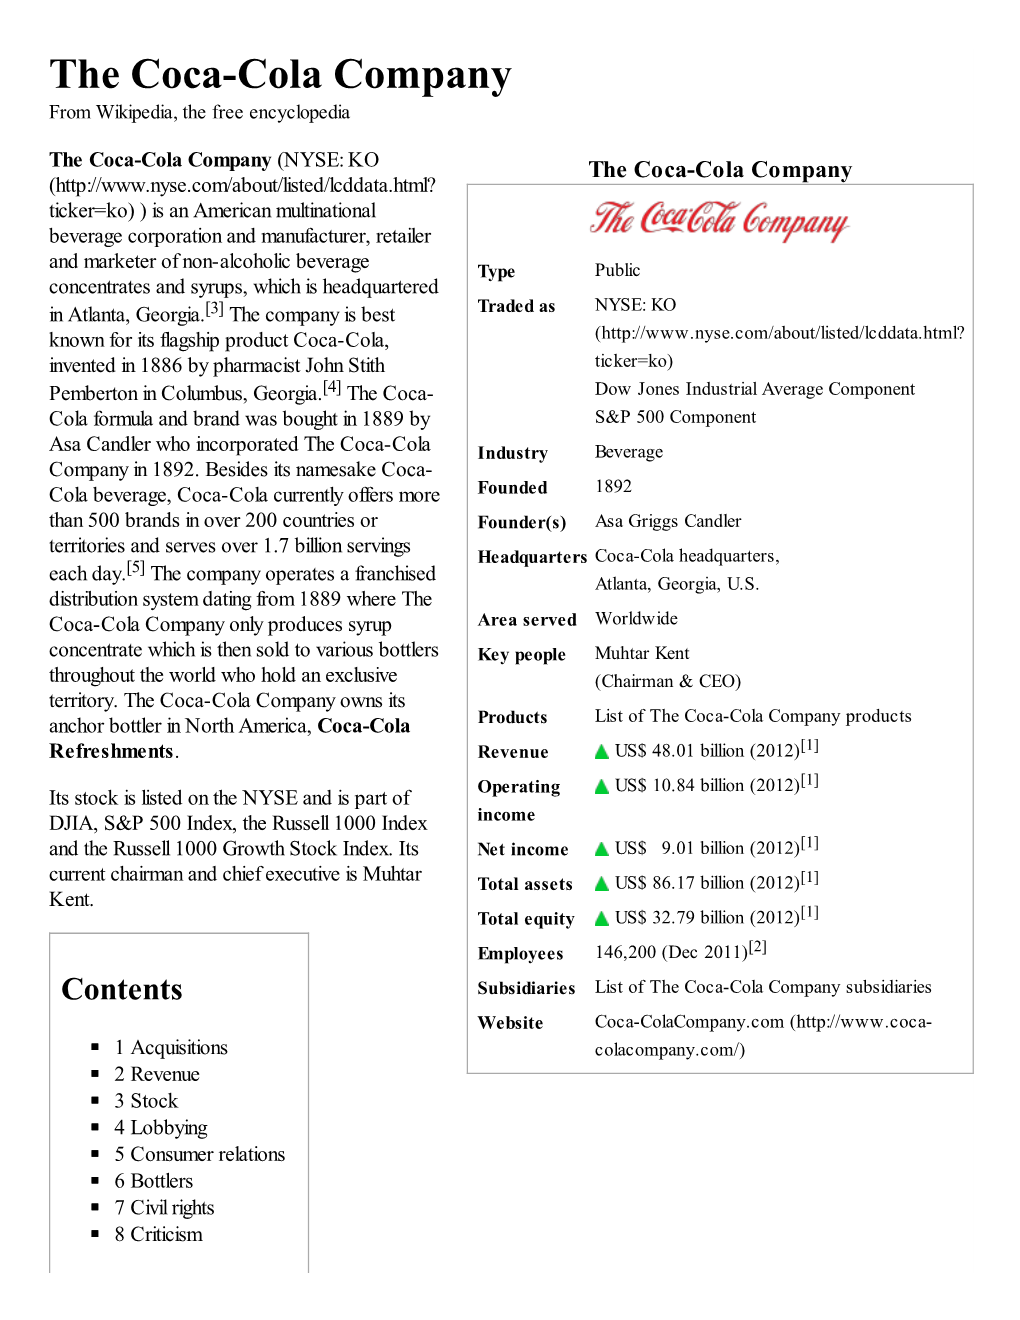 The Coca-Cola Company from Wikipedia, the Free Encyclopedia